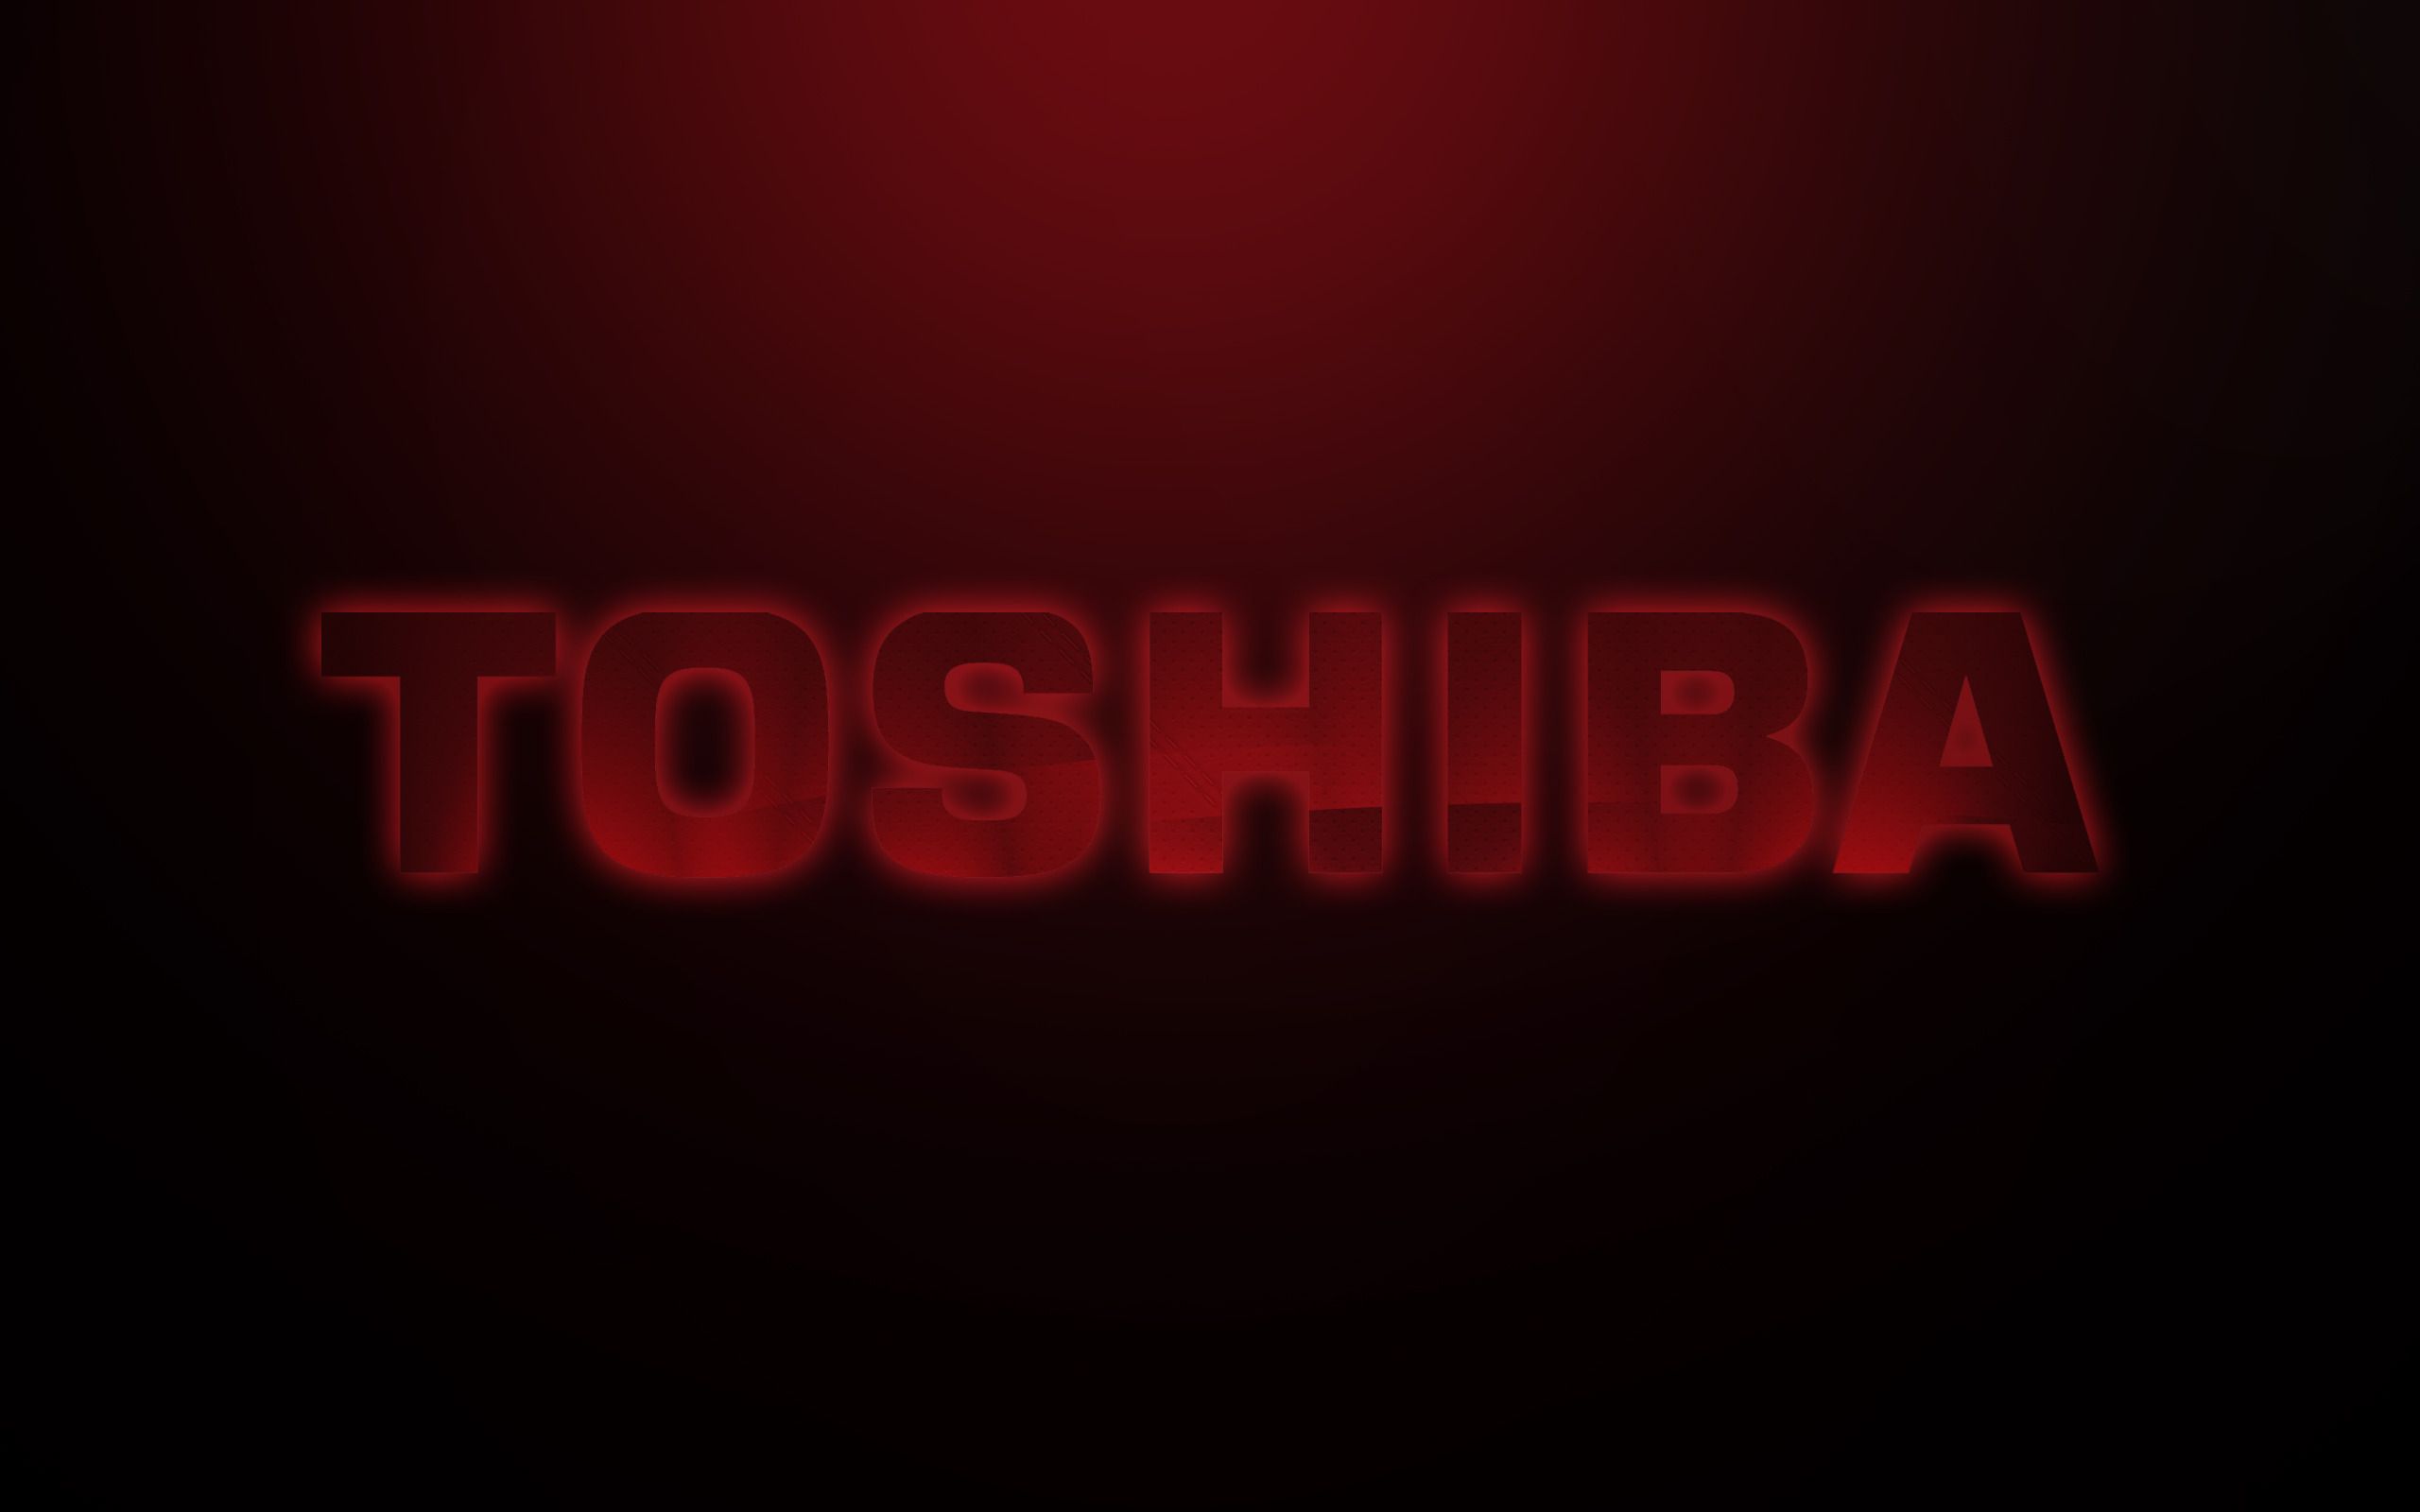 Toshiba desktop wallpapers